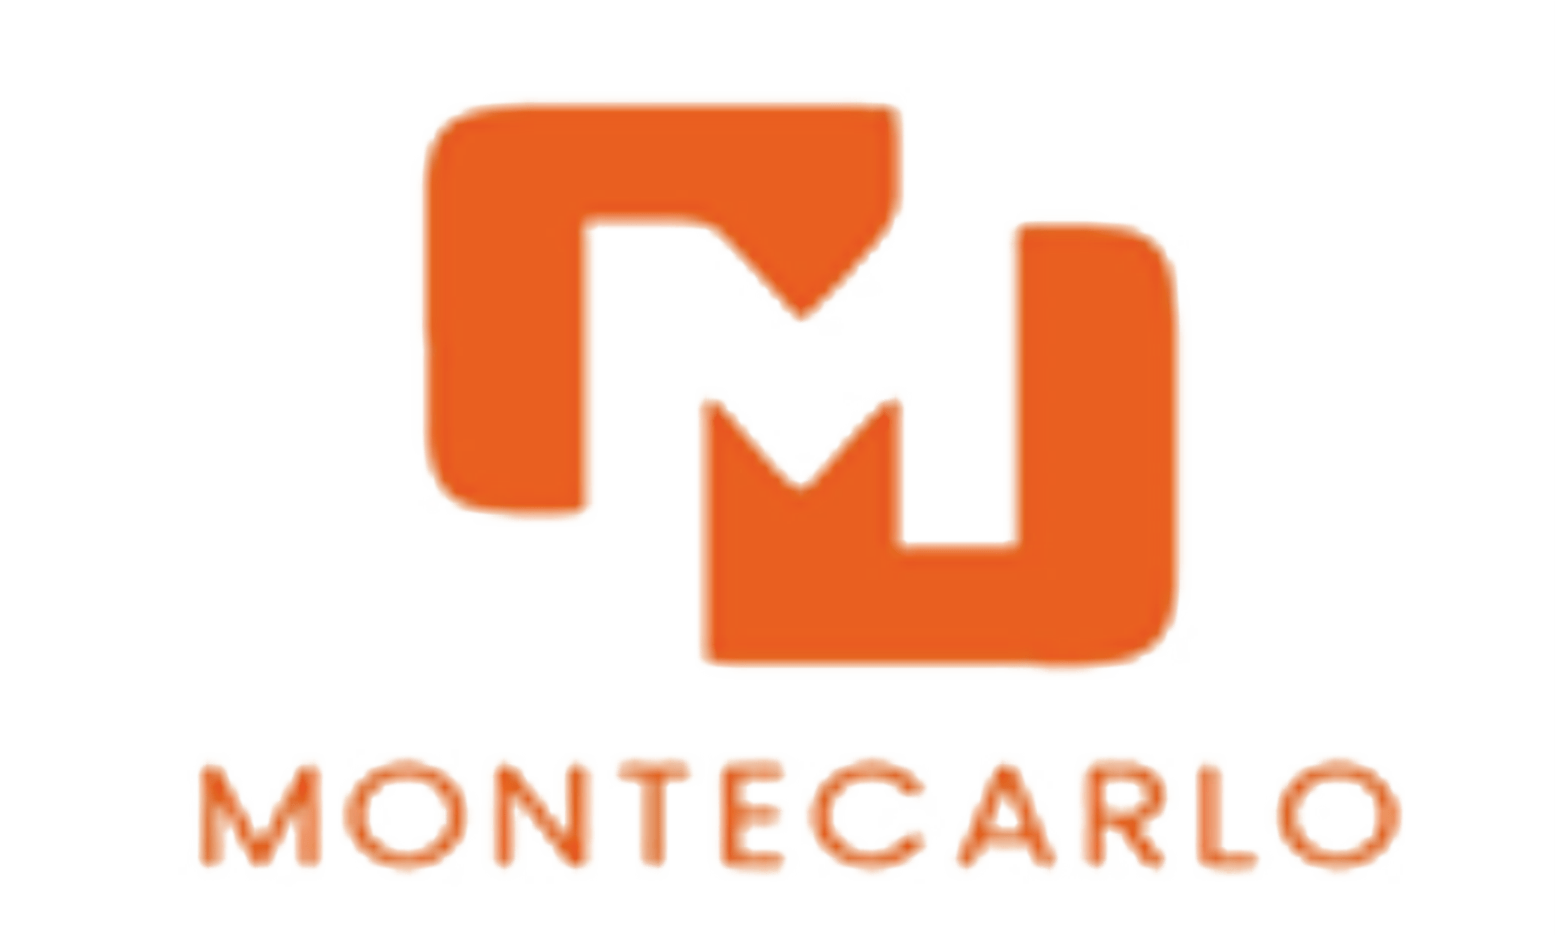 MONTECARLO logo